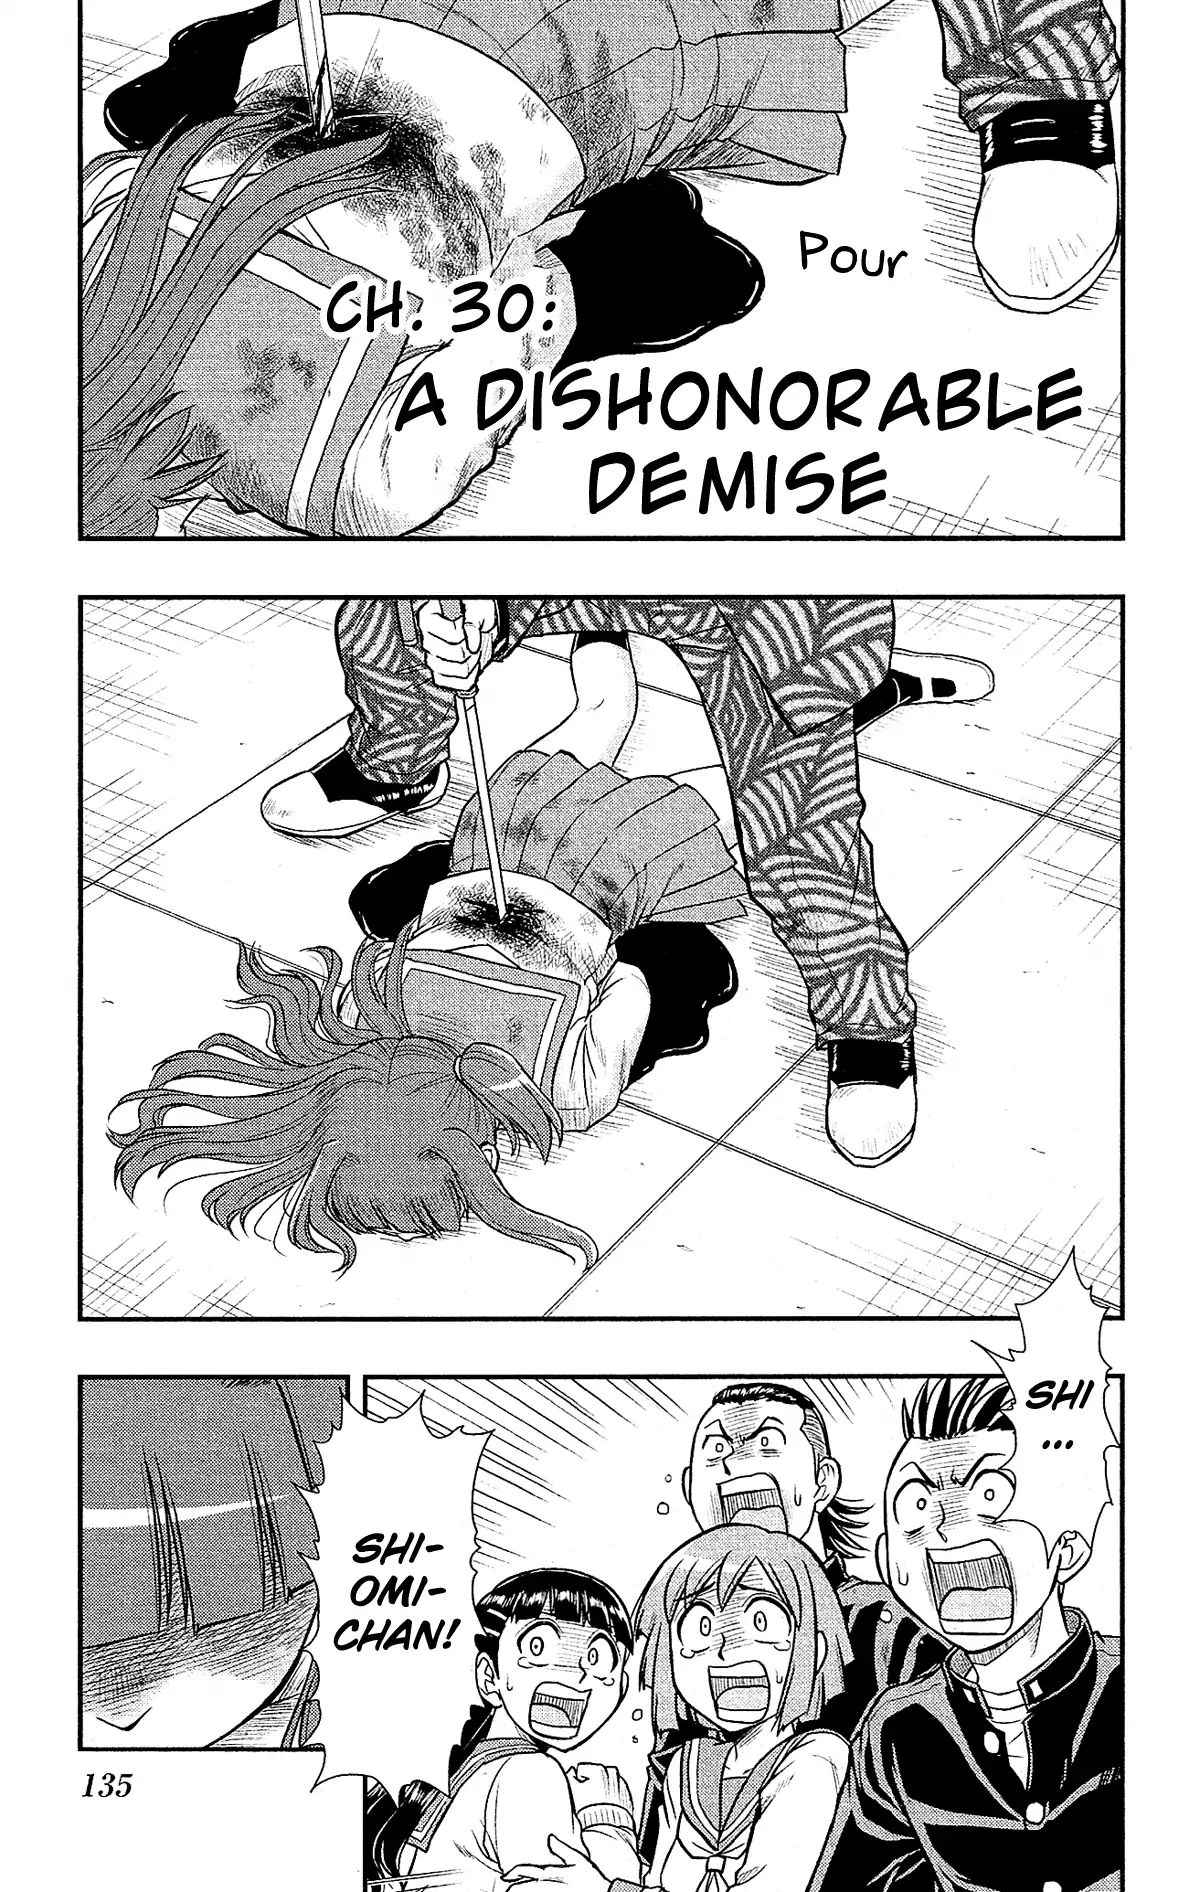 Shitei Bouryoku Shoujo Shiomi-Chan Vol.5 Chapter 30: A Dishonorable Demise - Picture 1